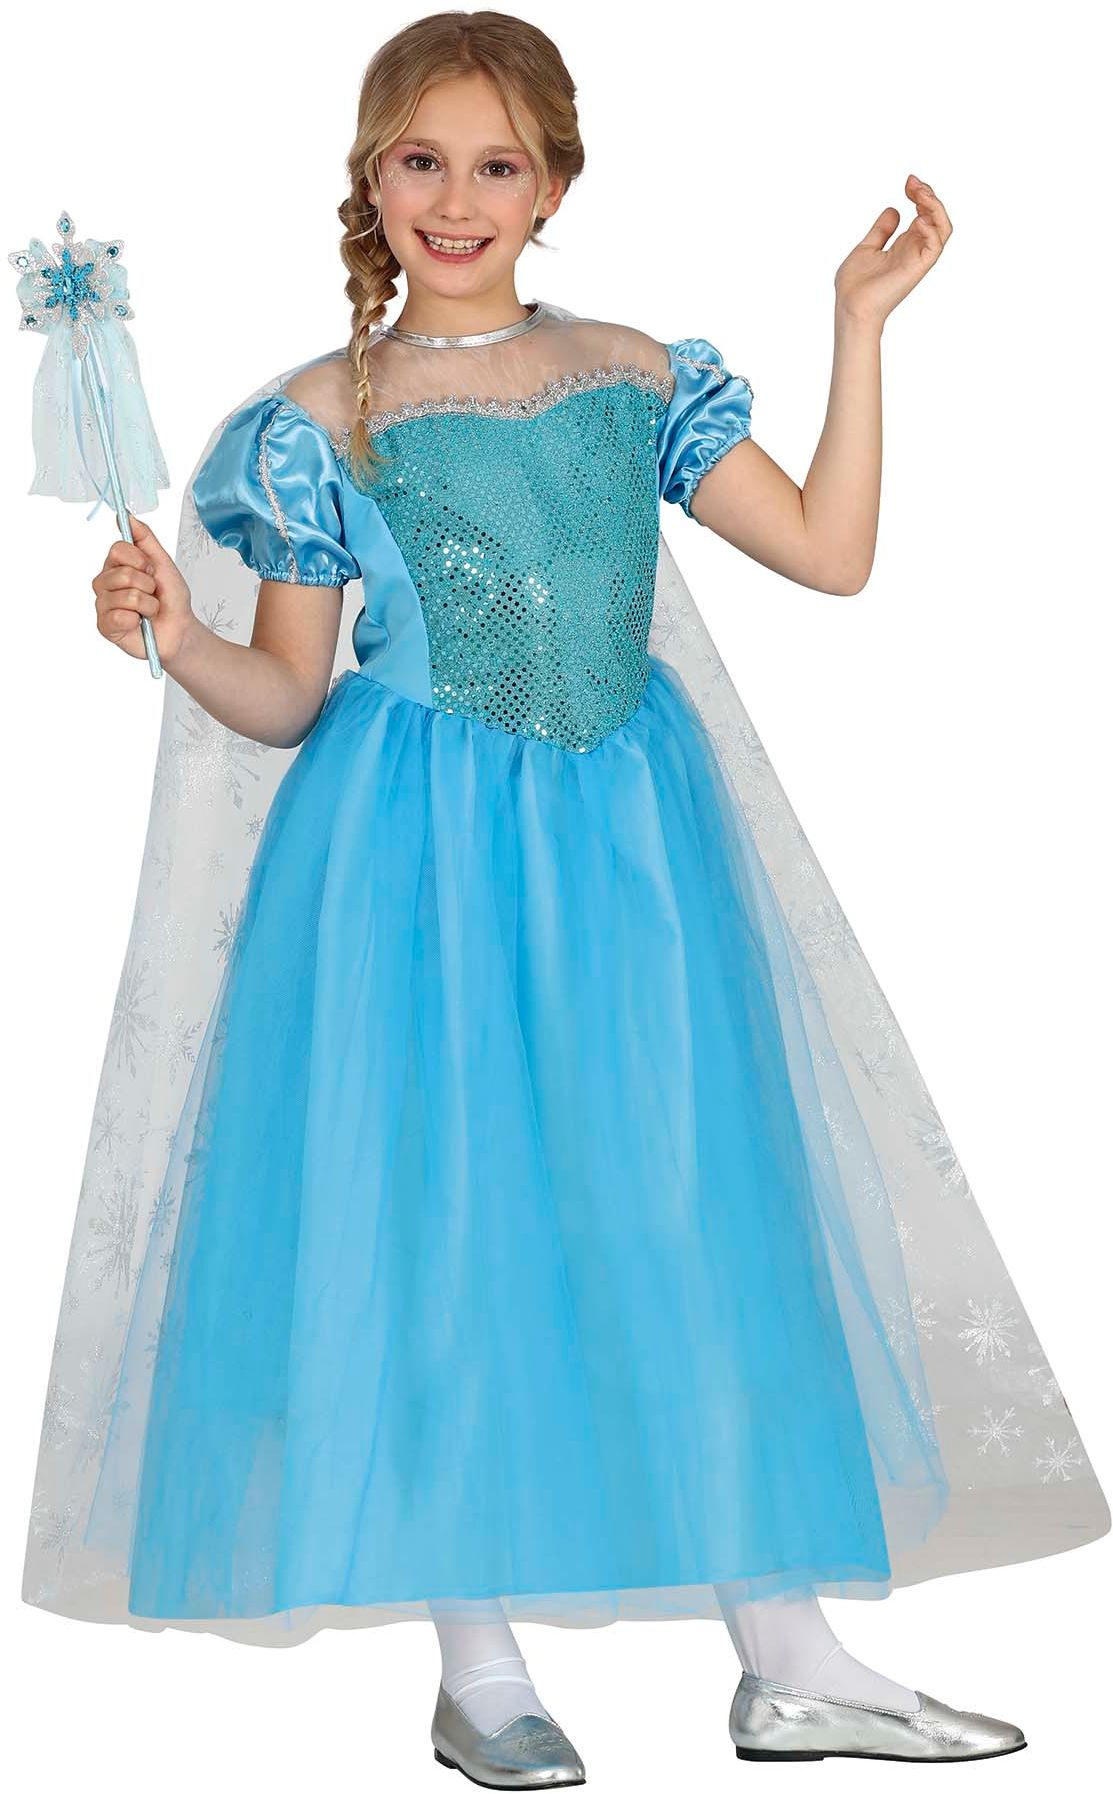 Blauwe Elsa Frozen prinses outfit meisjes